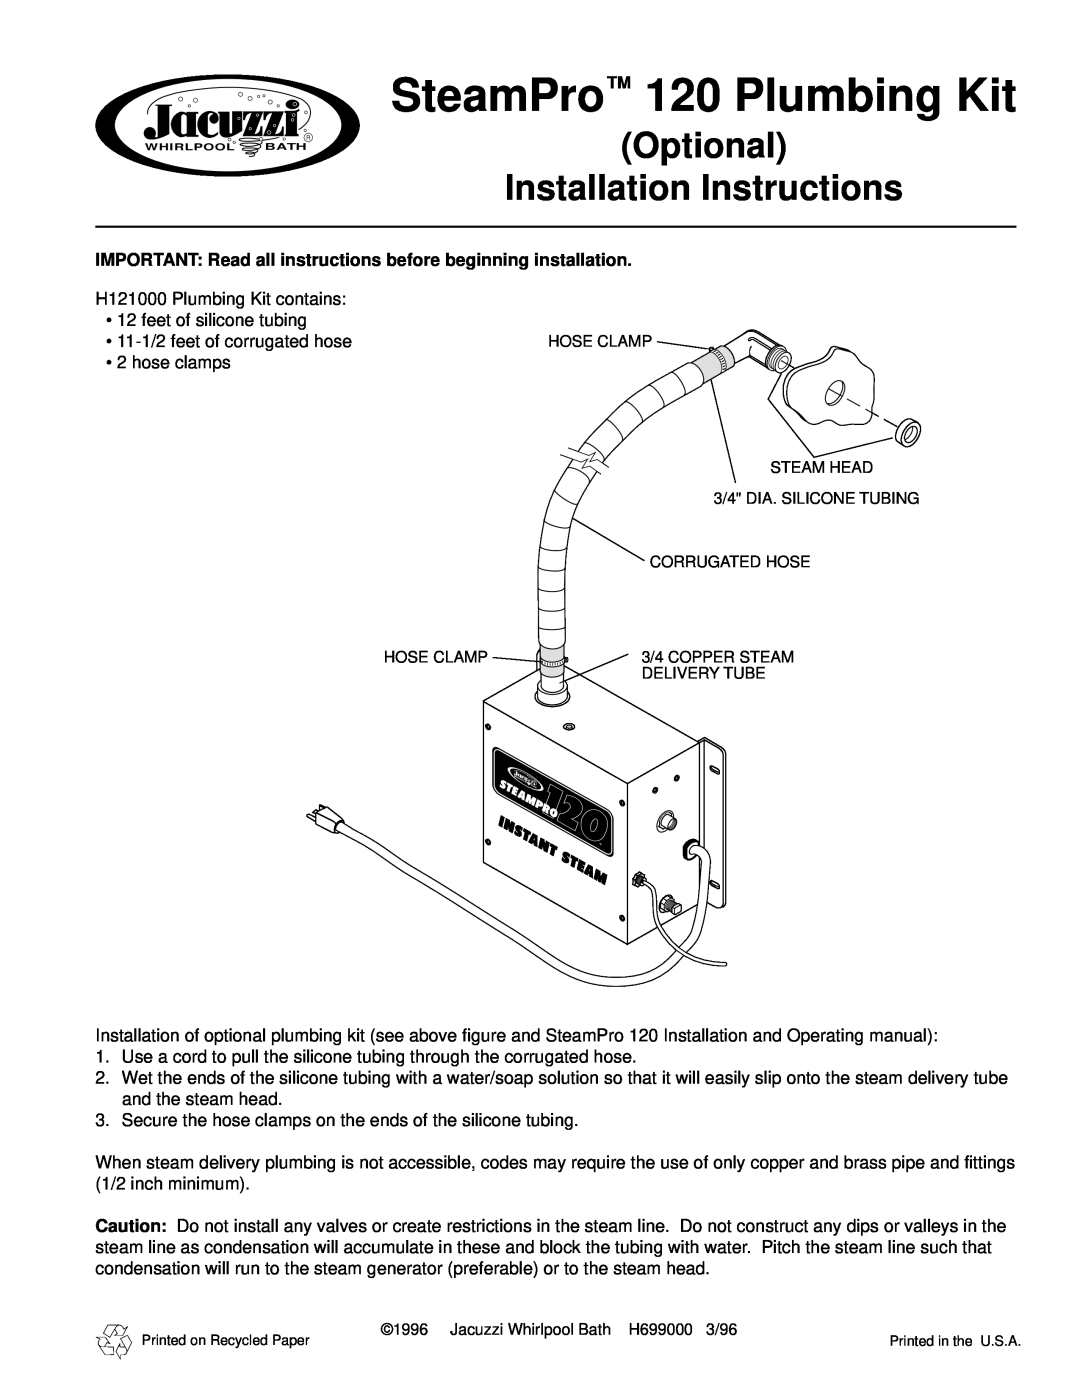 Jacuzzi installation instructions SteamPro 120 Plumbing Kit, Optional Installation Instructions 